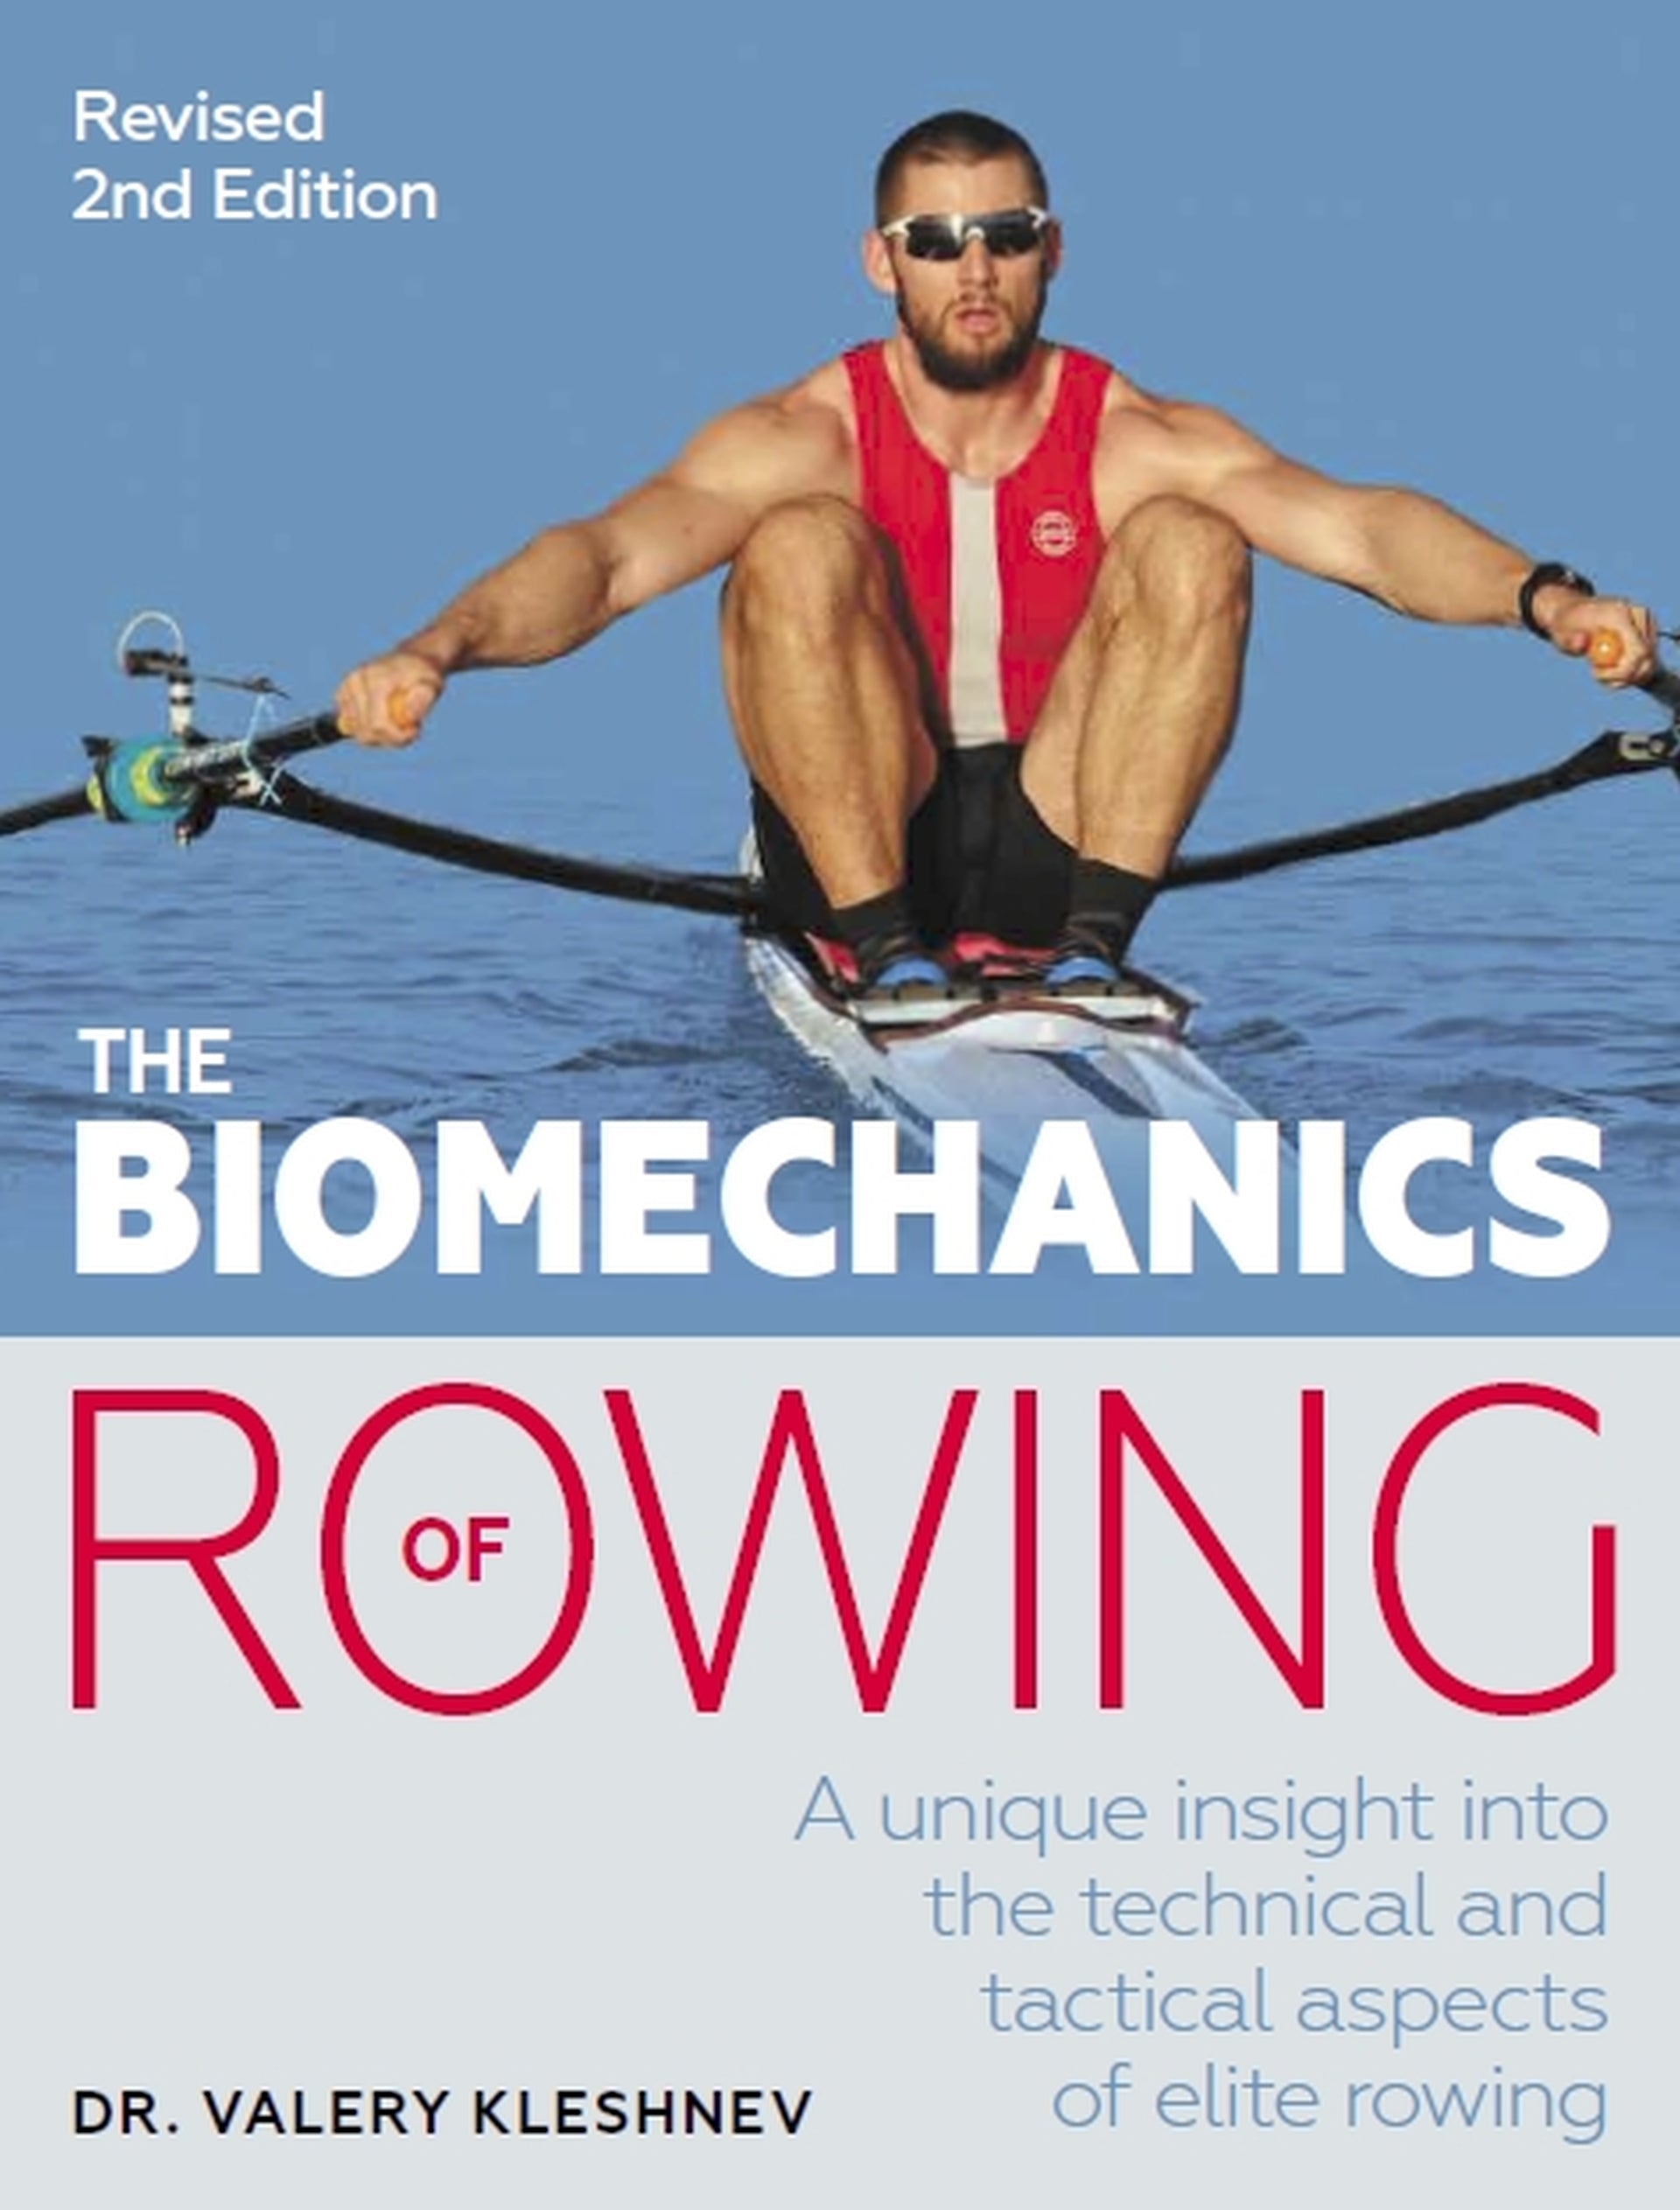 The Biomechanics of Rowing